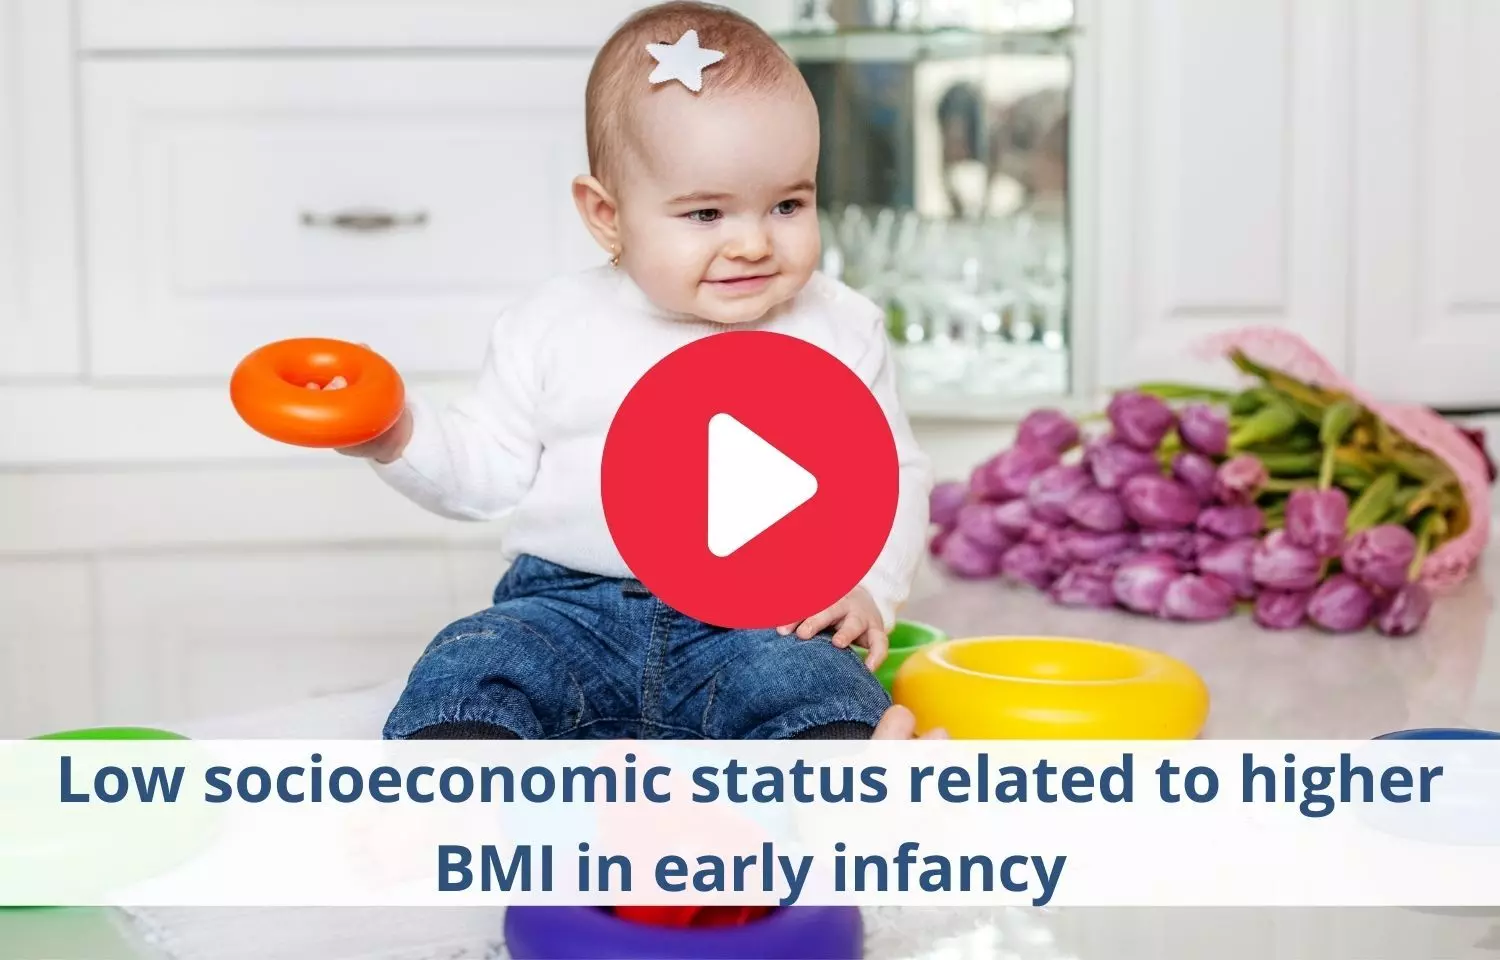 Low socioeconomic status tied to higher BMI in infants